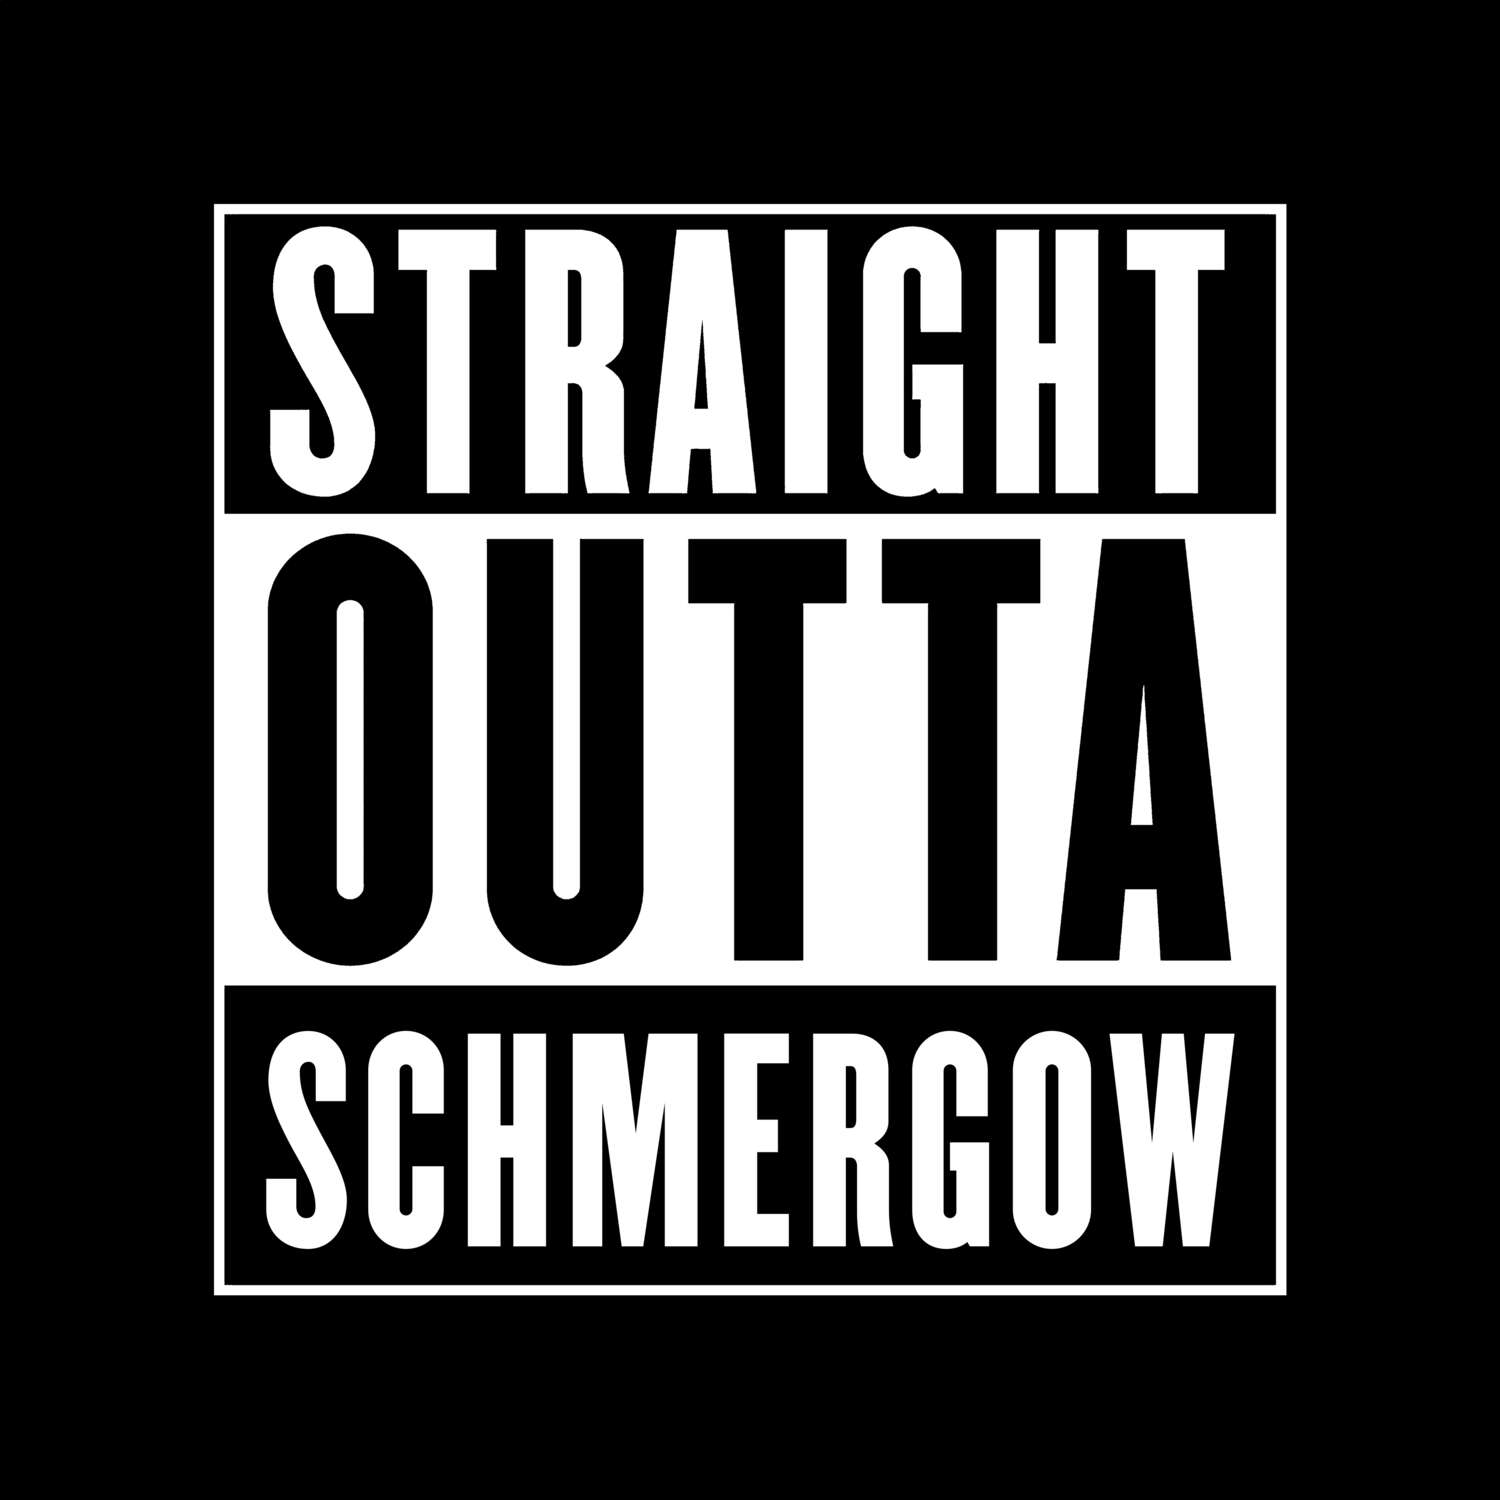 Schmergow T-Shirt »Straight Outta«